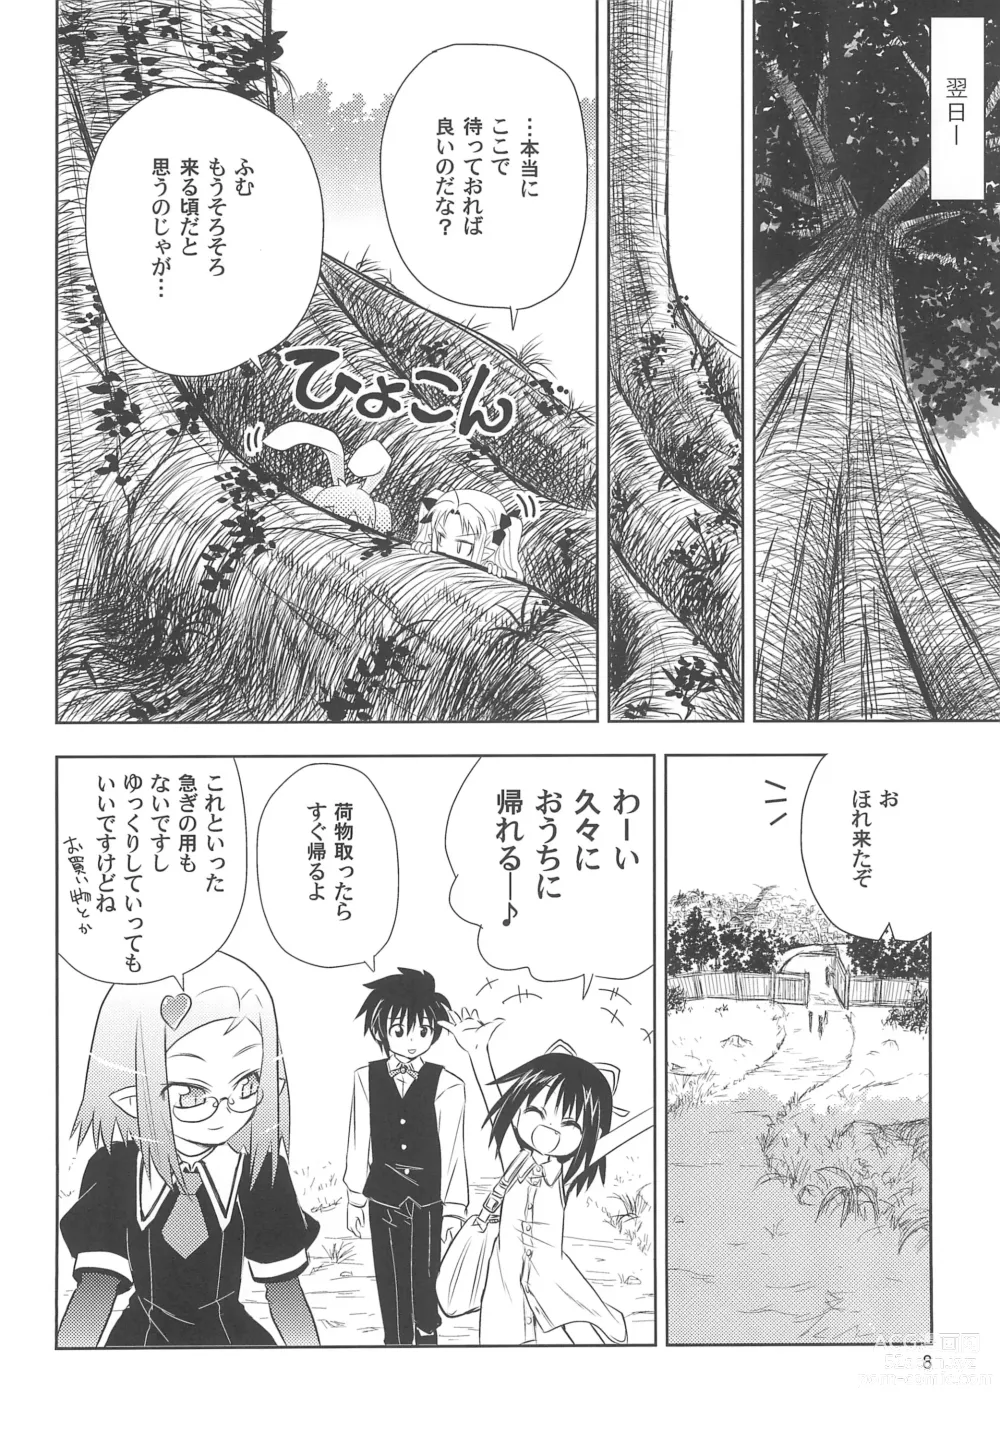 Page 8 of doujinshi Maigo no Maigo no Hime-sama Plus